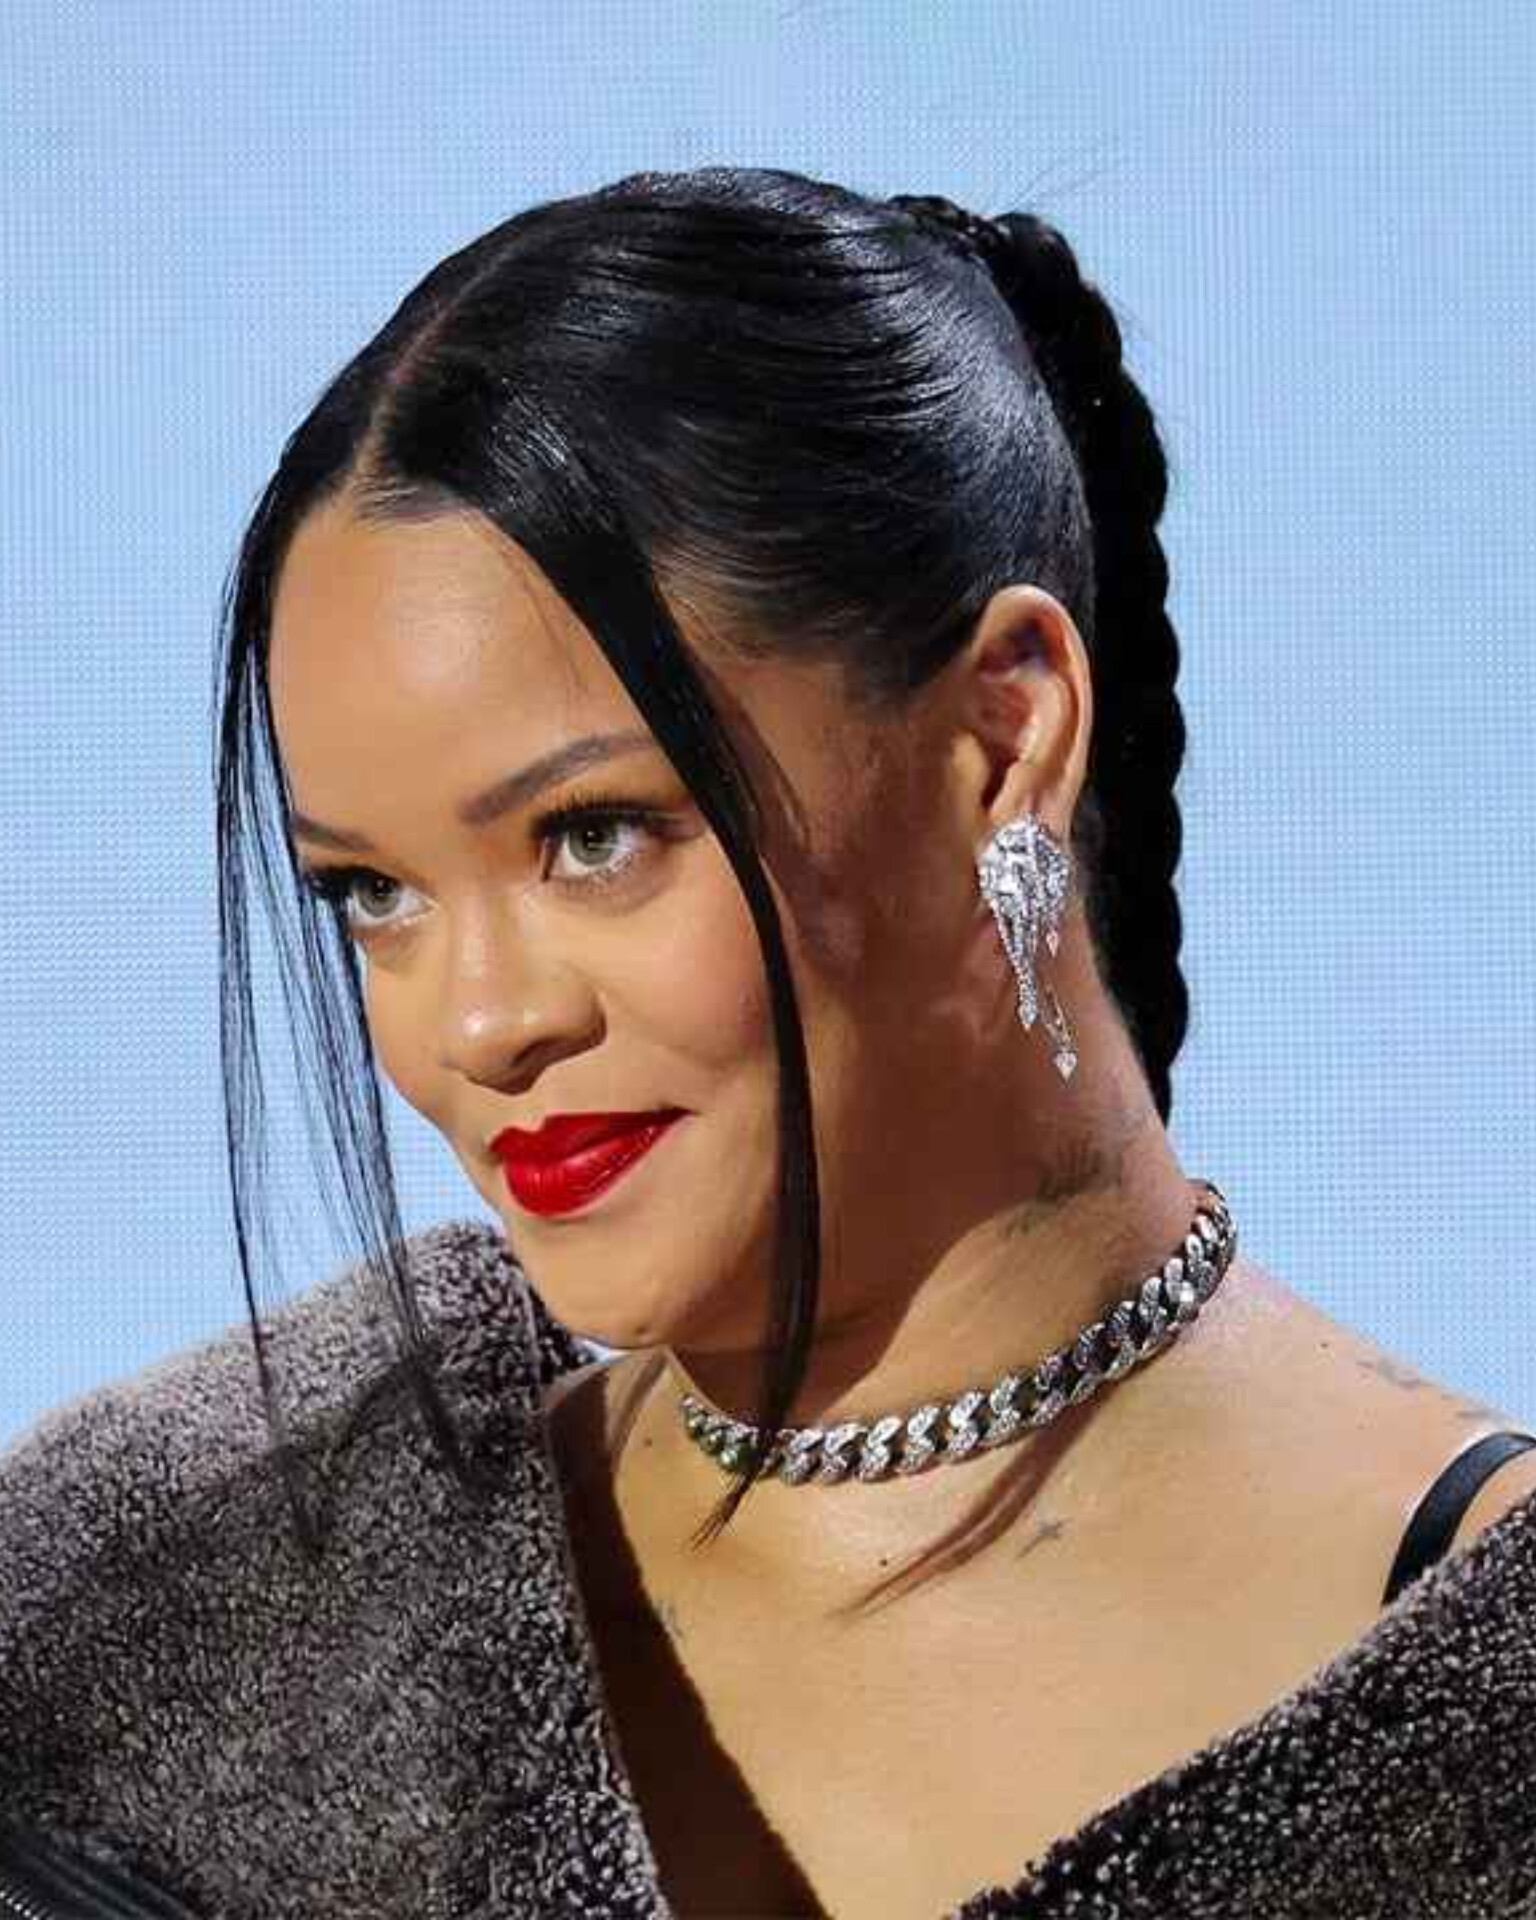 Rihanna 1 billion streams on Spotify